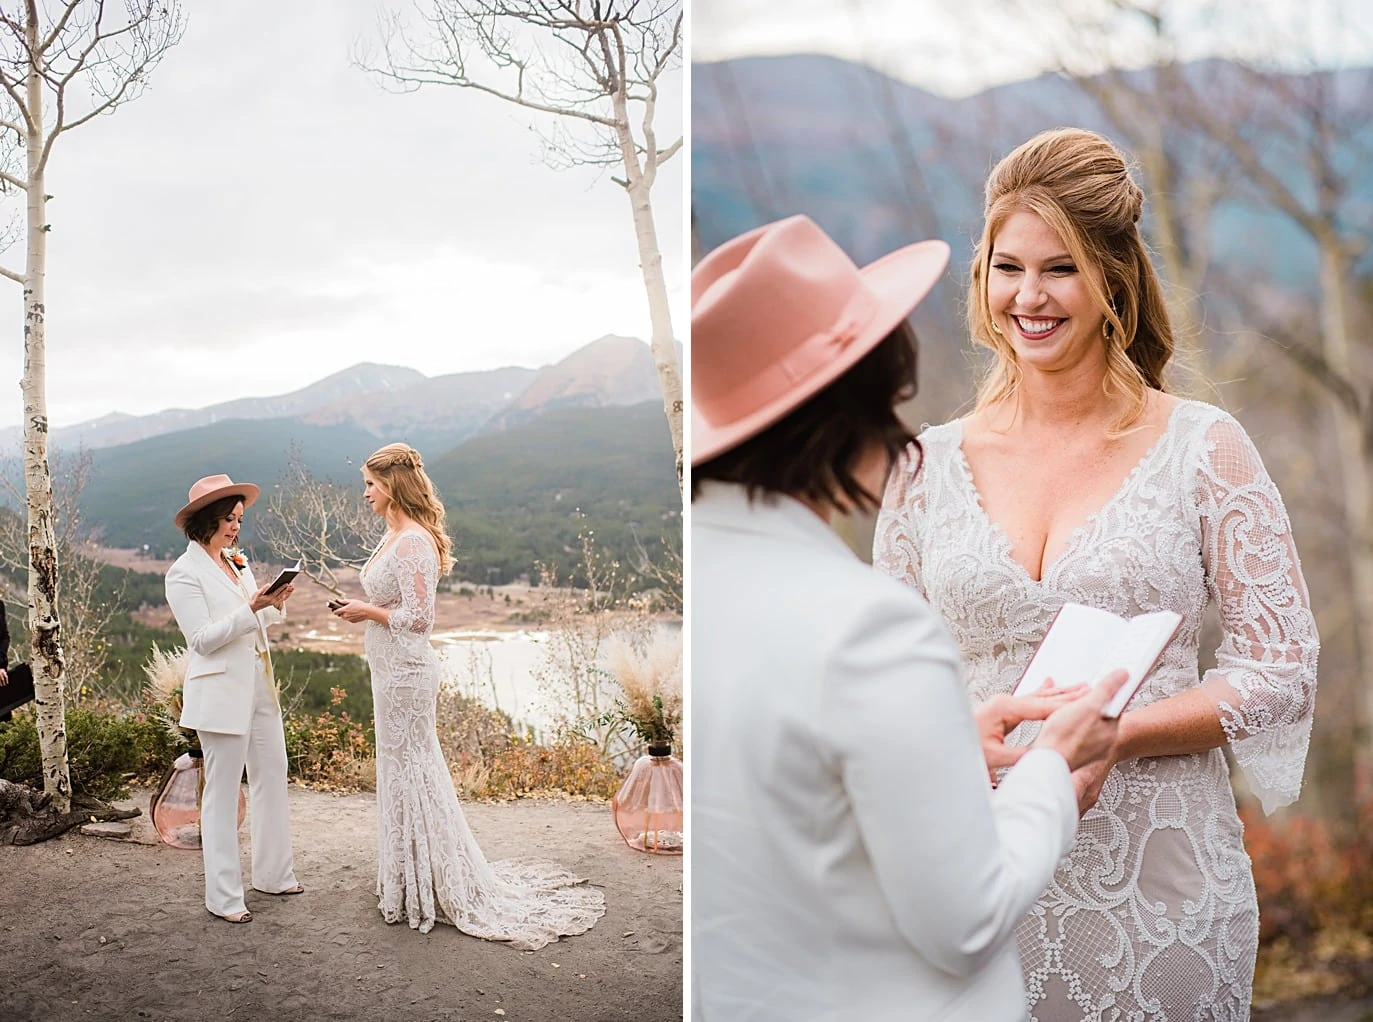 brides exchange vows at Boreas Pass microwedding by Colorado gay wedding photographer Jennie Crate